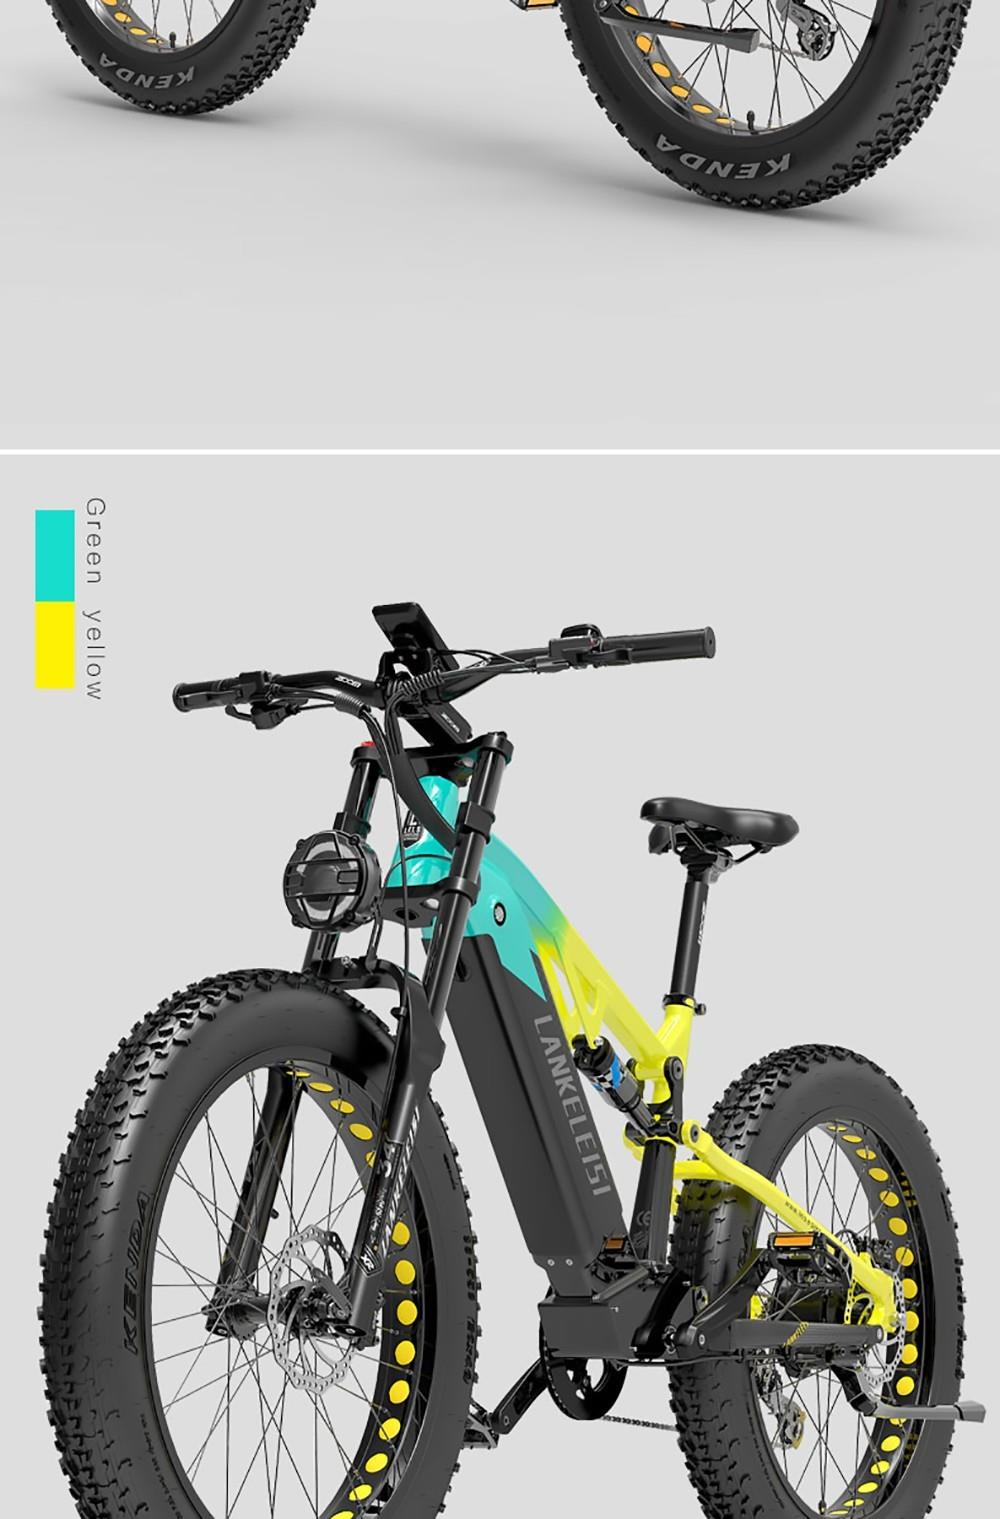 Bici elettrica LANKELEISI RV800 26*4.0'' Ruota giallo-verde